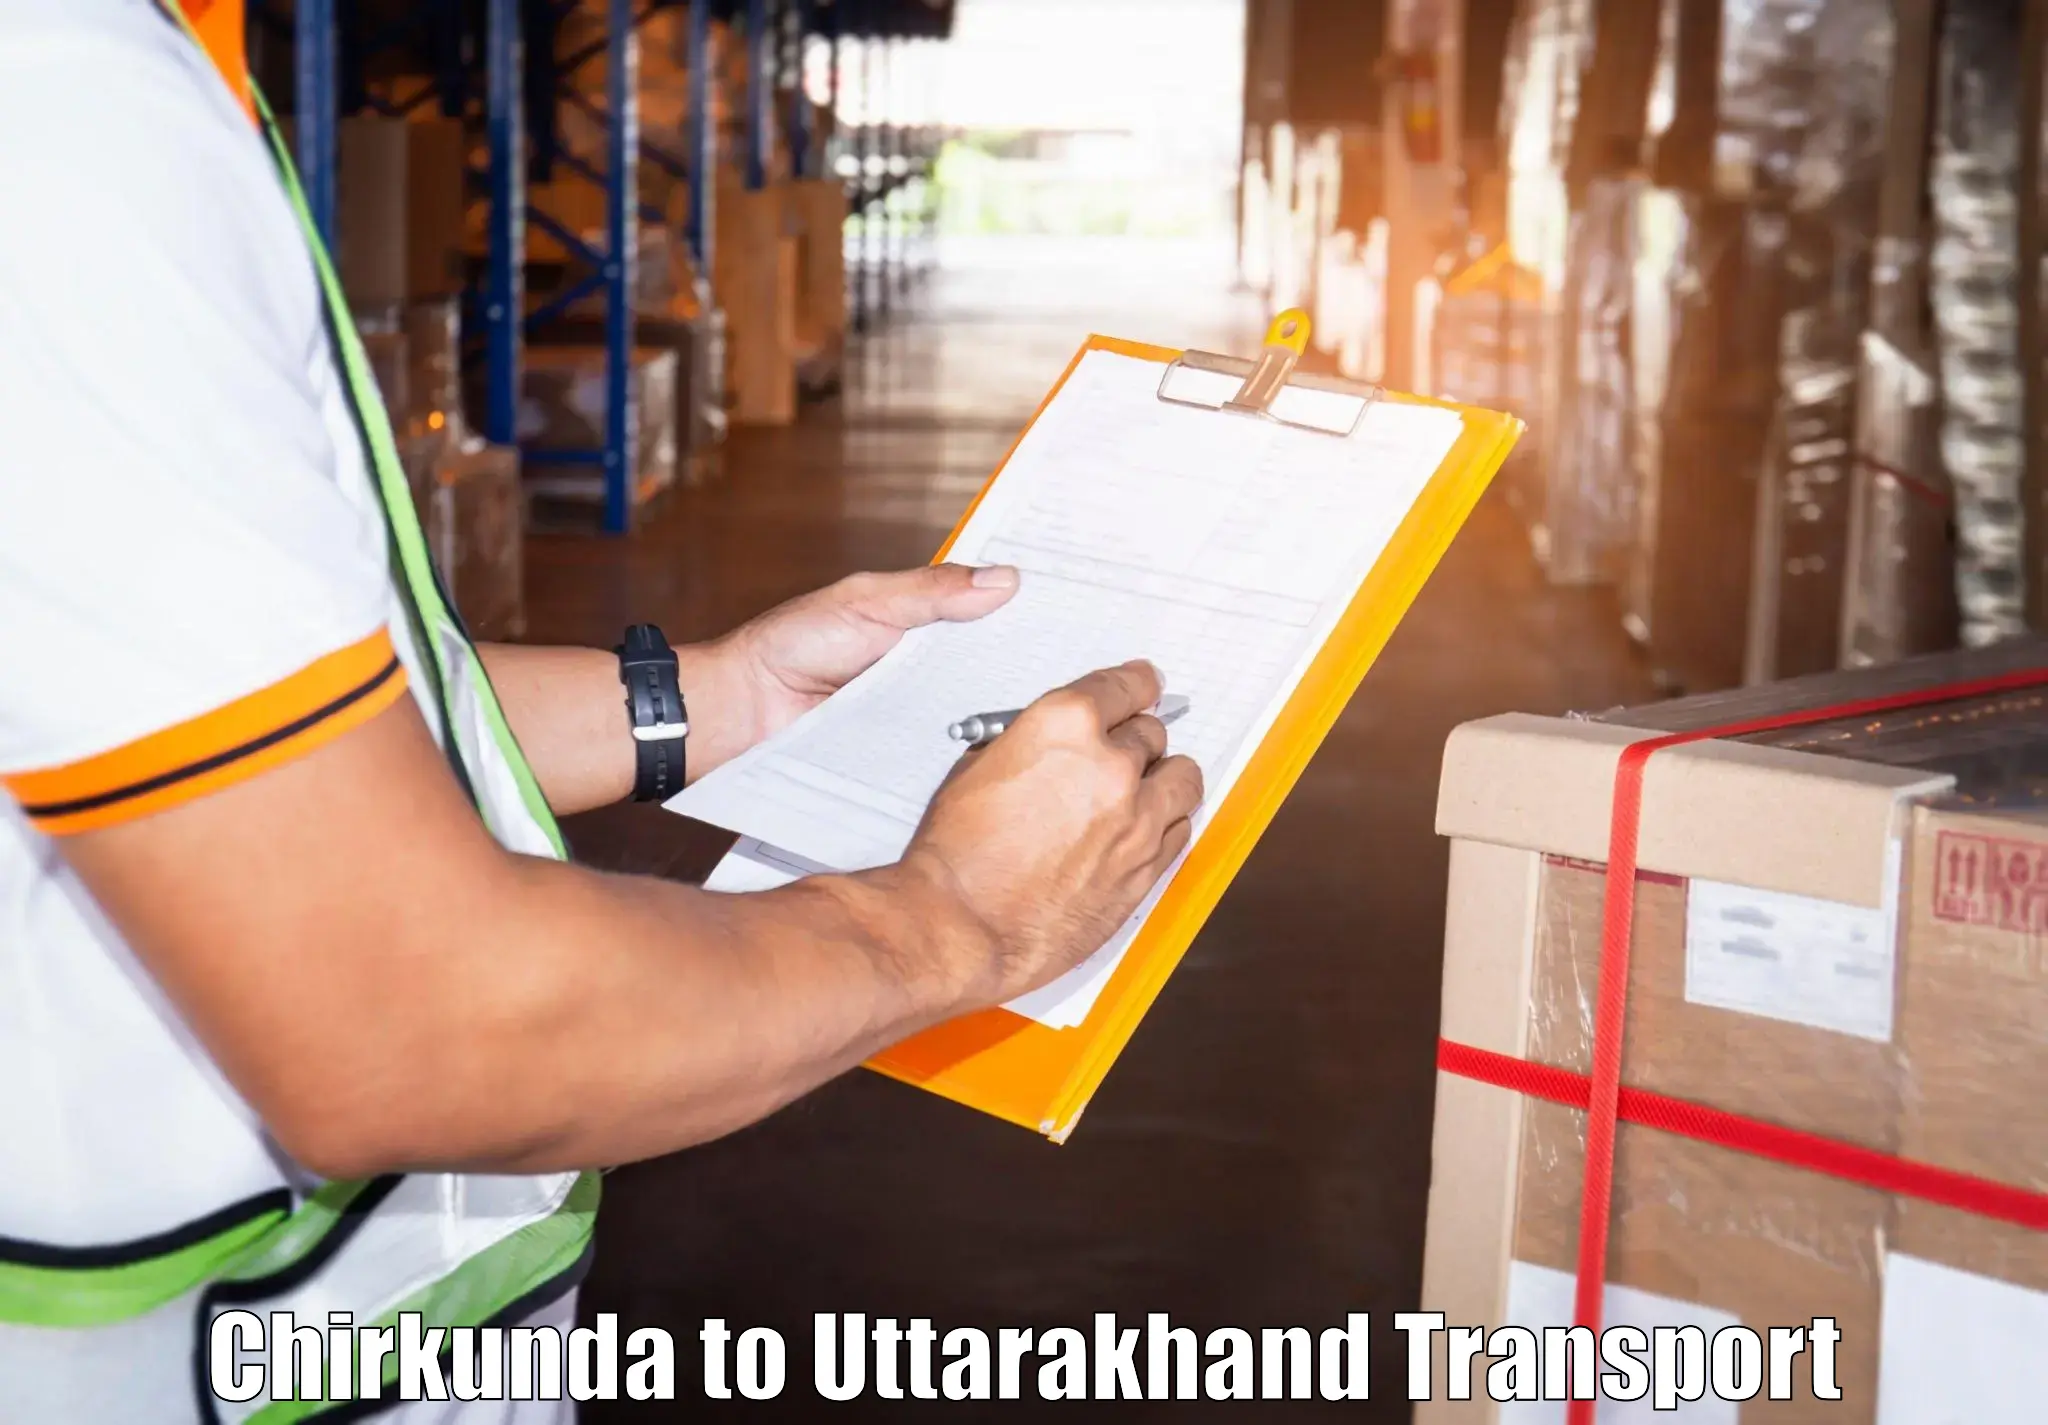 Truck transport companies in India Chirkunda to Rishikesh